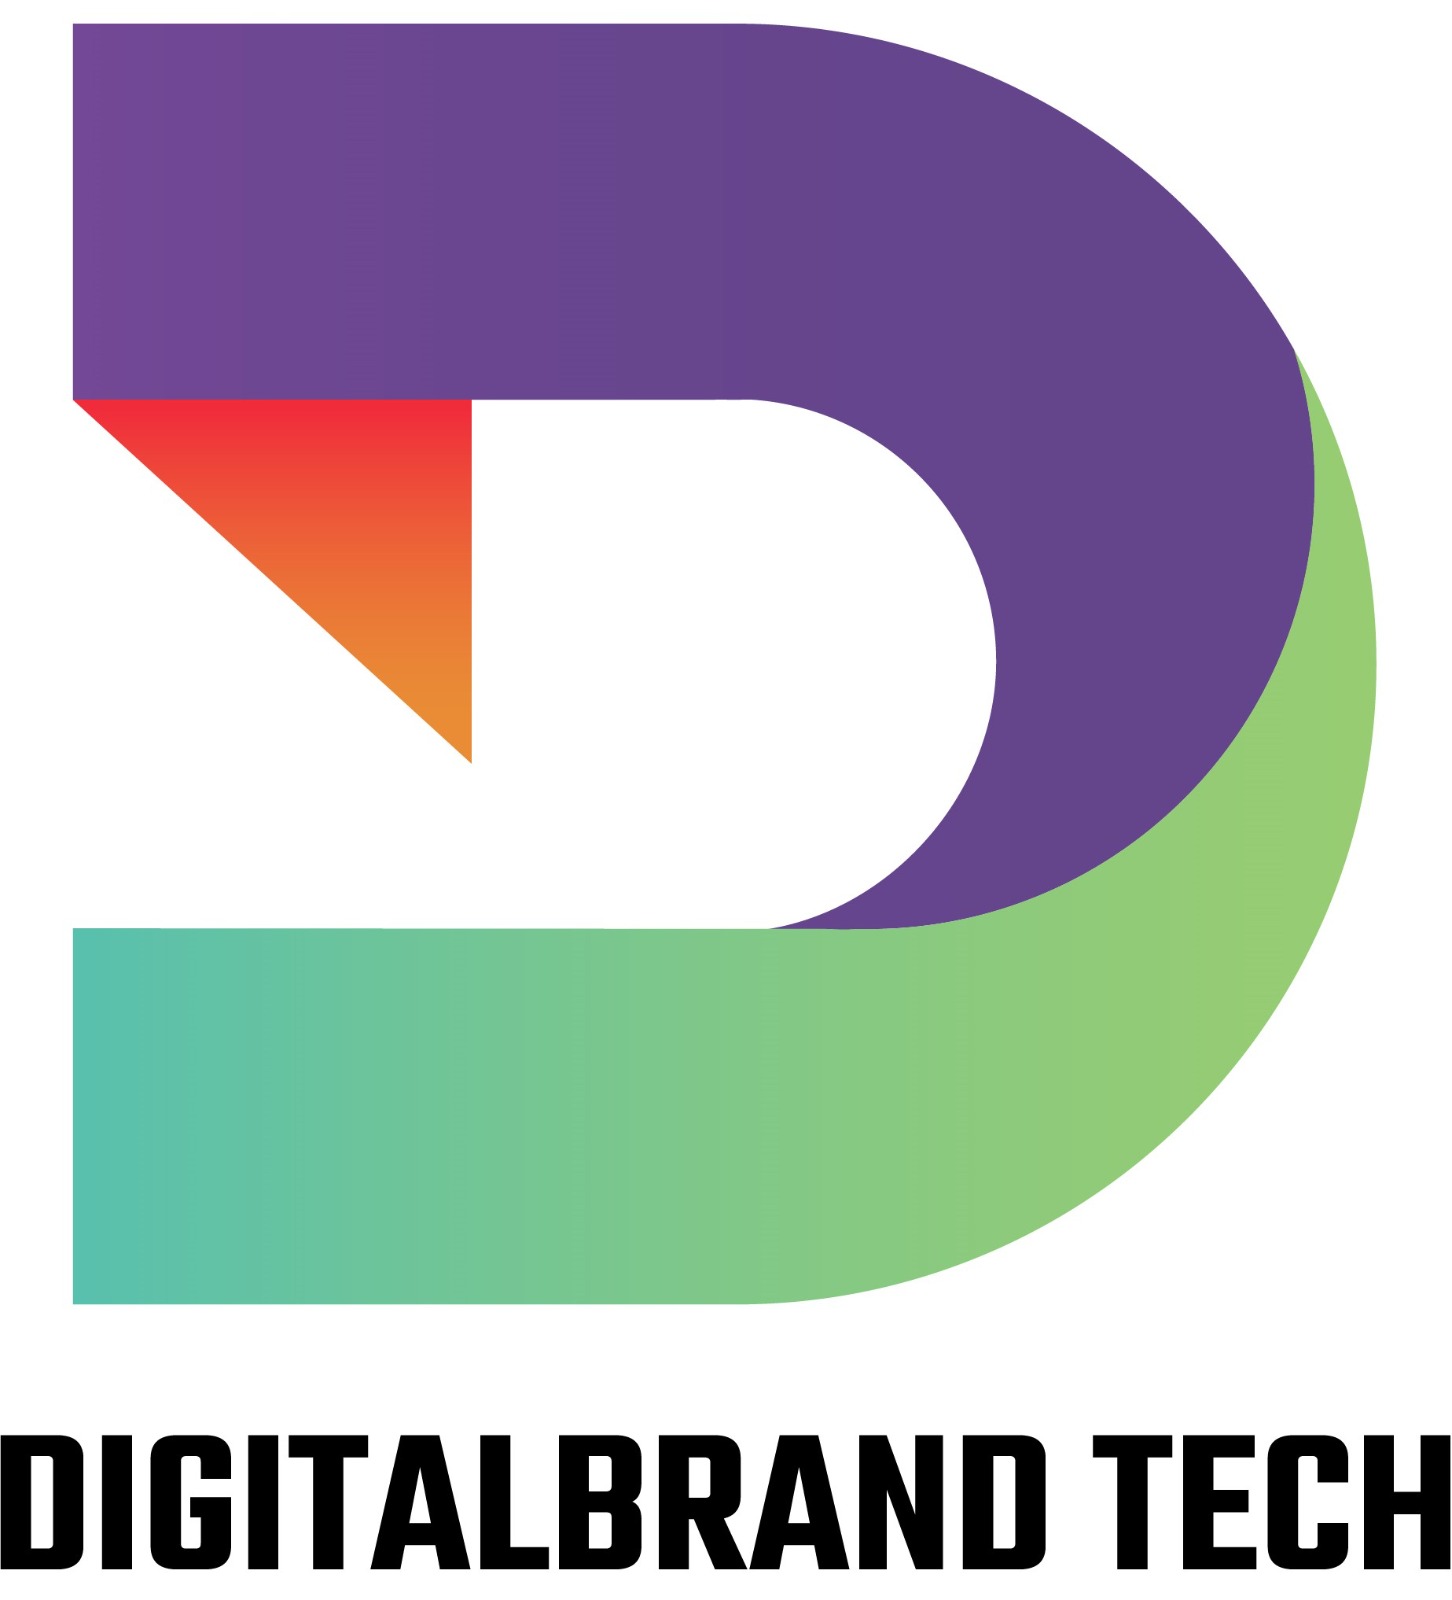 Digital Brand Tech